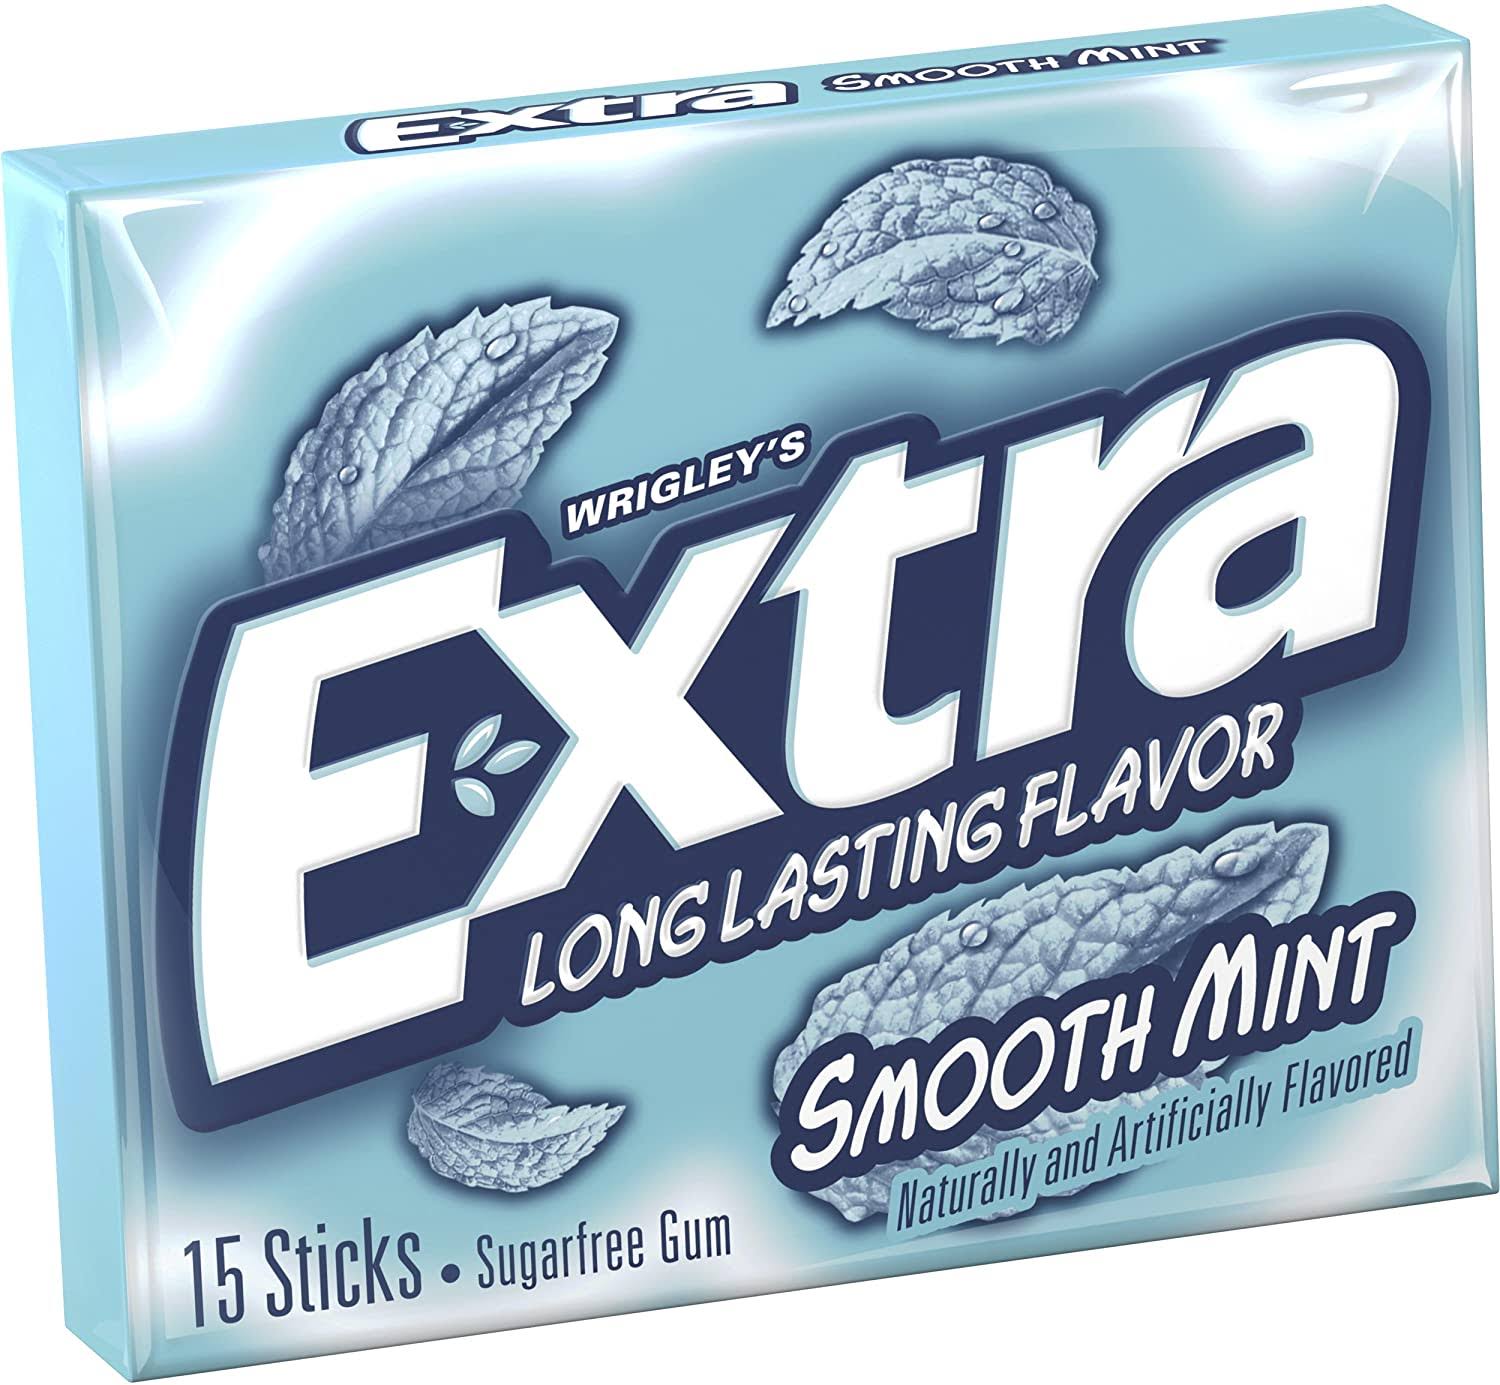 Wrigley's Extra Long Lasting Flavor Gum - Smooth Mint, 15 Sticks